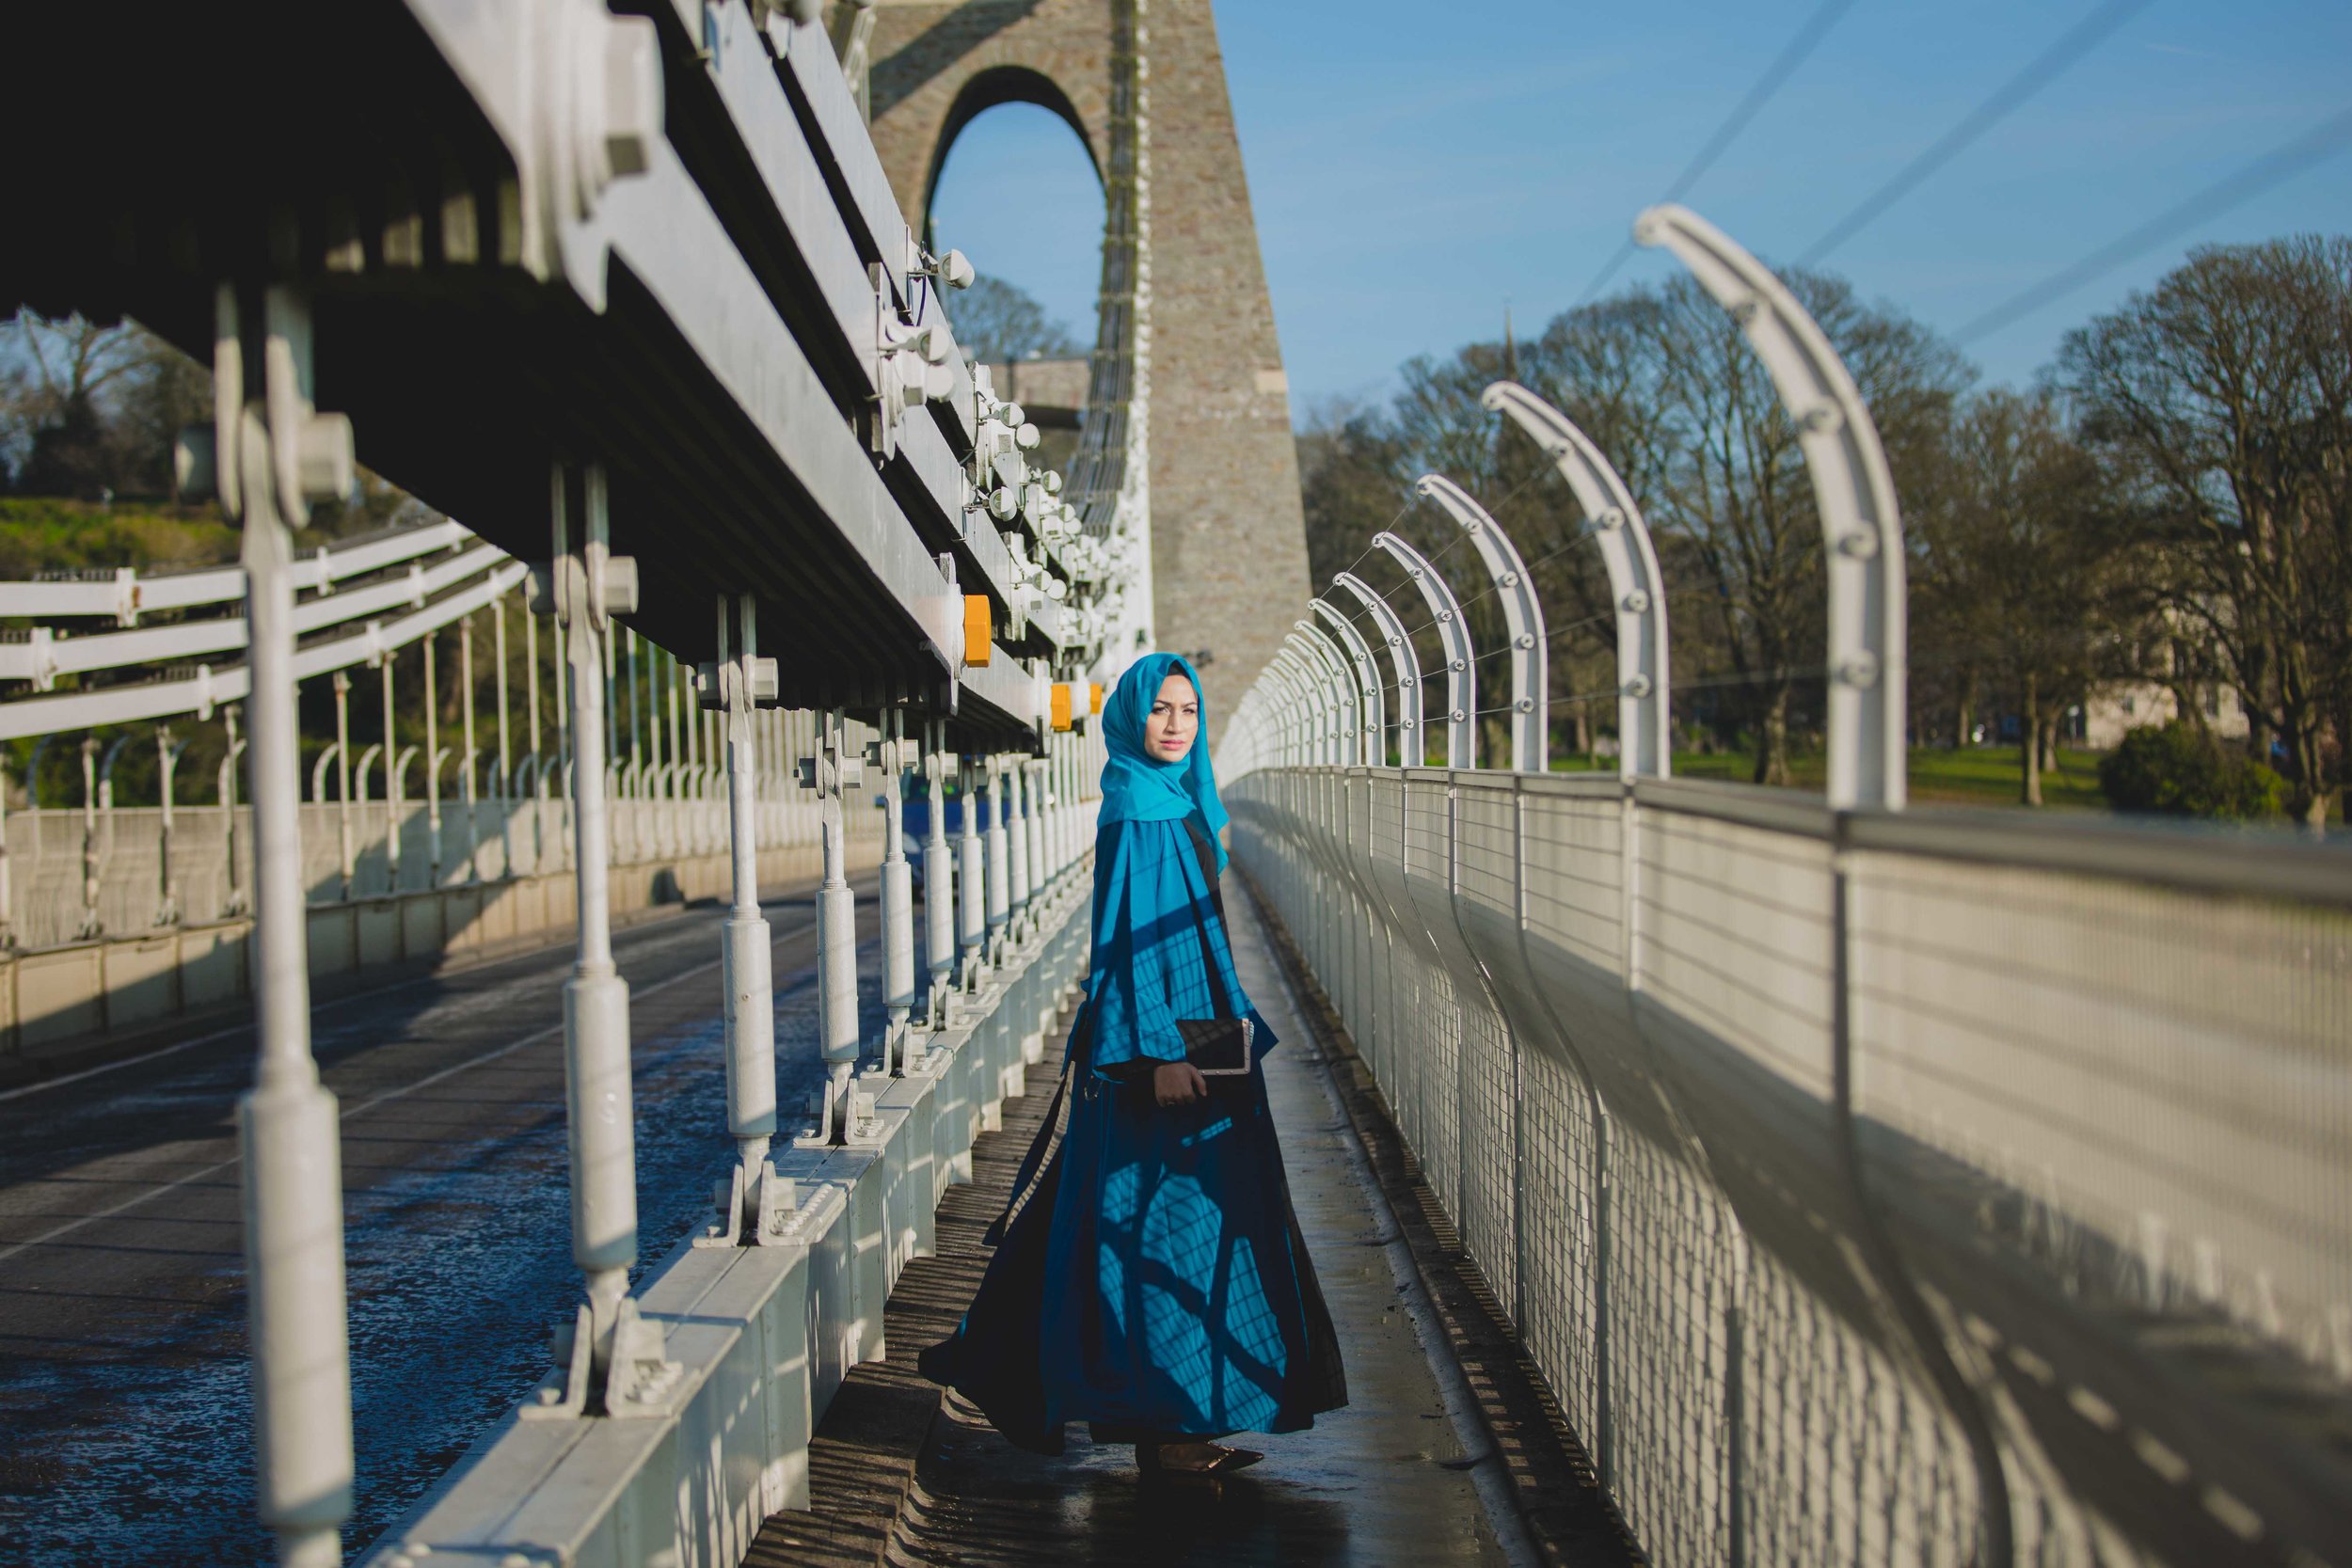 suspension-bridge-modest-street-aisha-rahman-fashion-photography-london-bristol-natalia-smith-photography-19.jpg